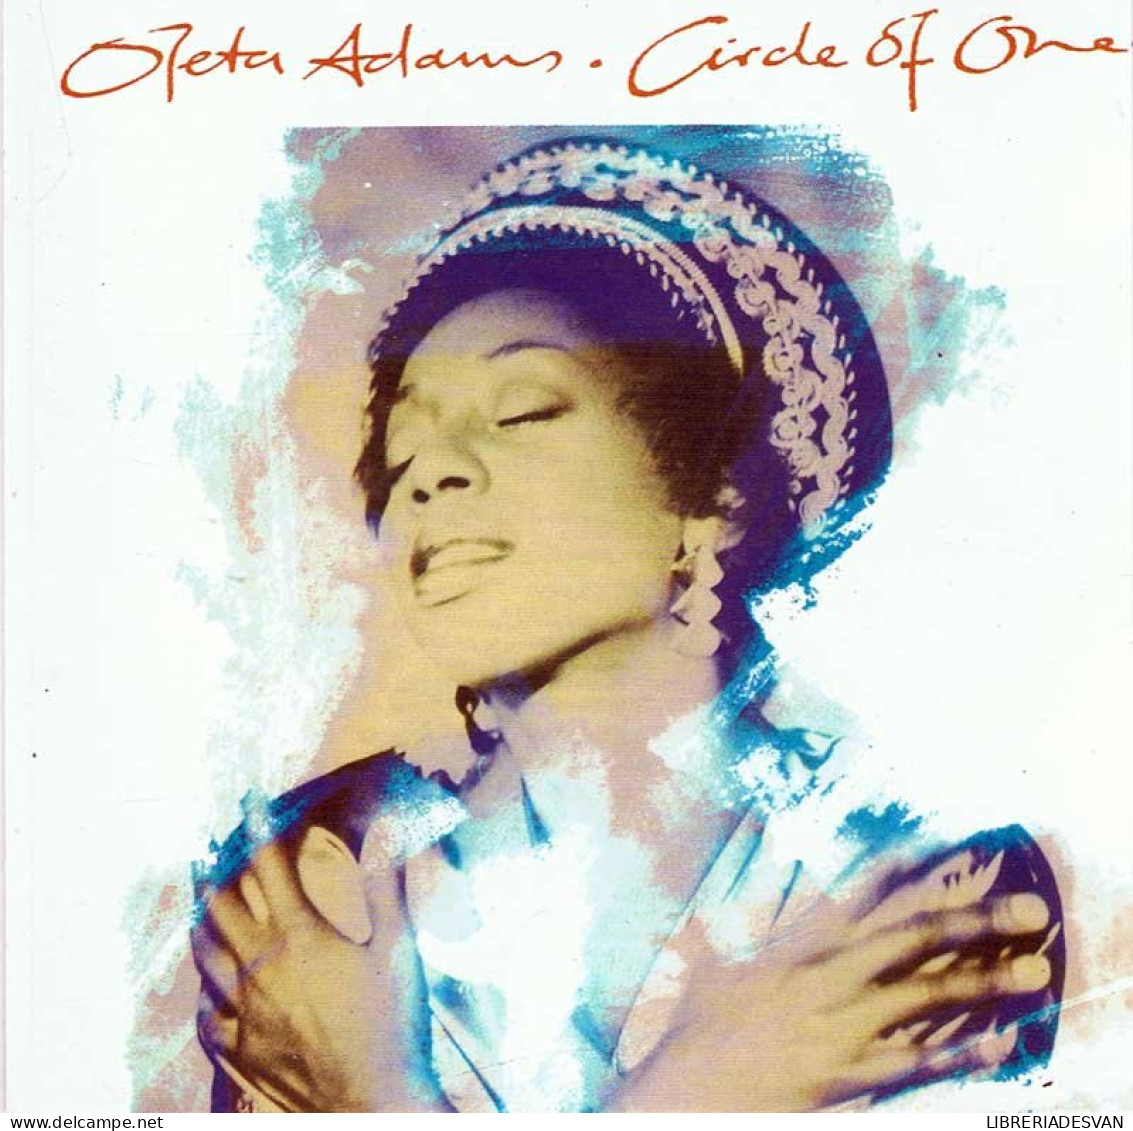 Oleta Adams - Circle Of One. CD - Jazz